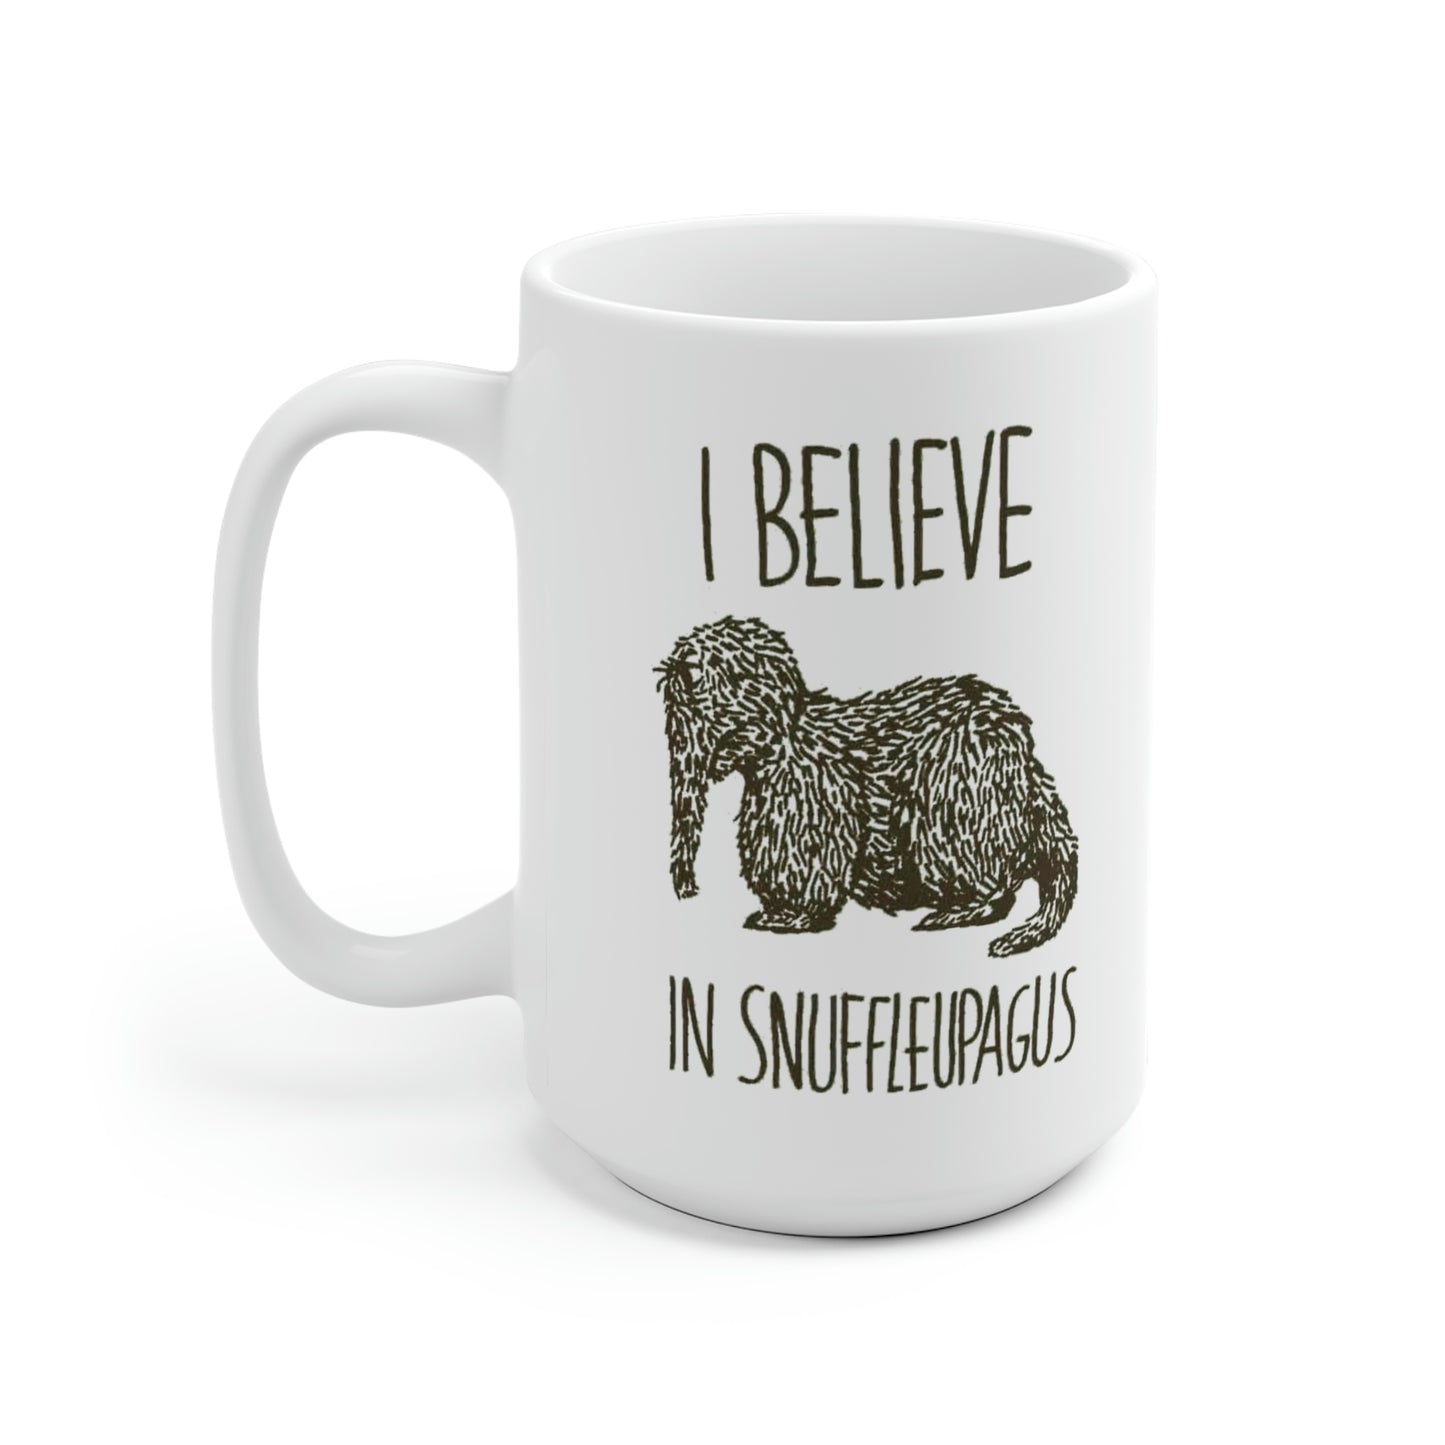 I believe in Snuffleupagus - White Ceramic Mug